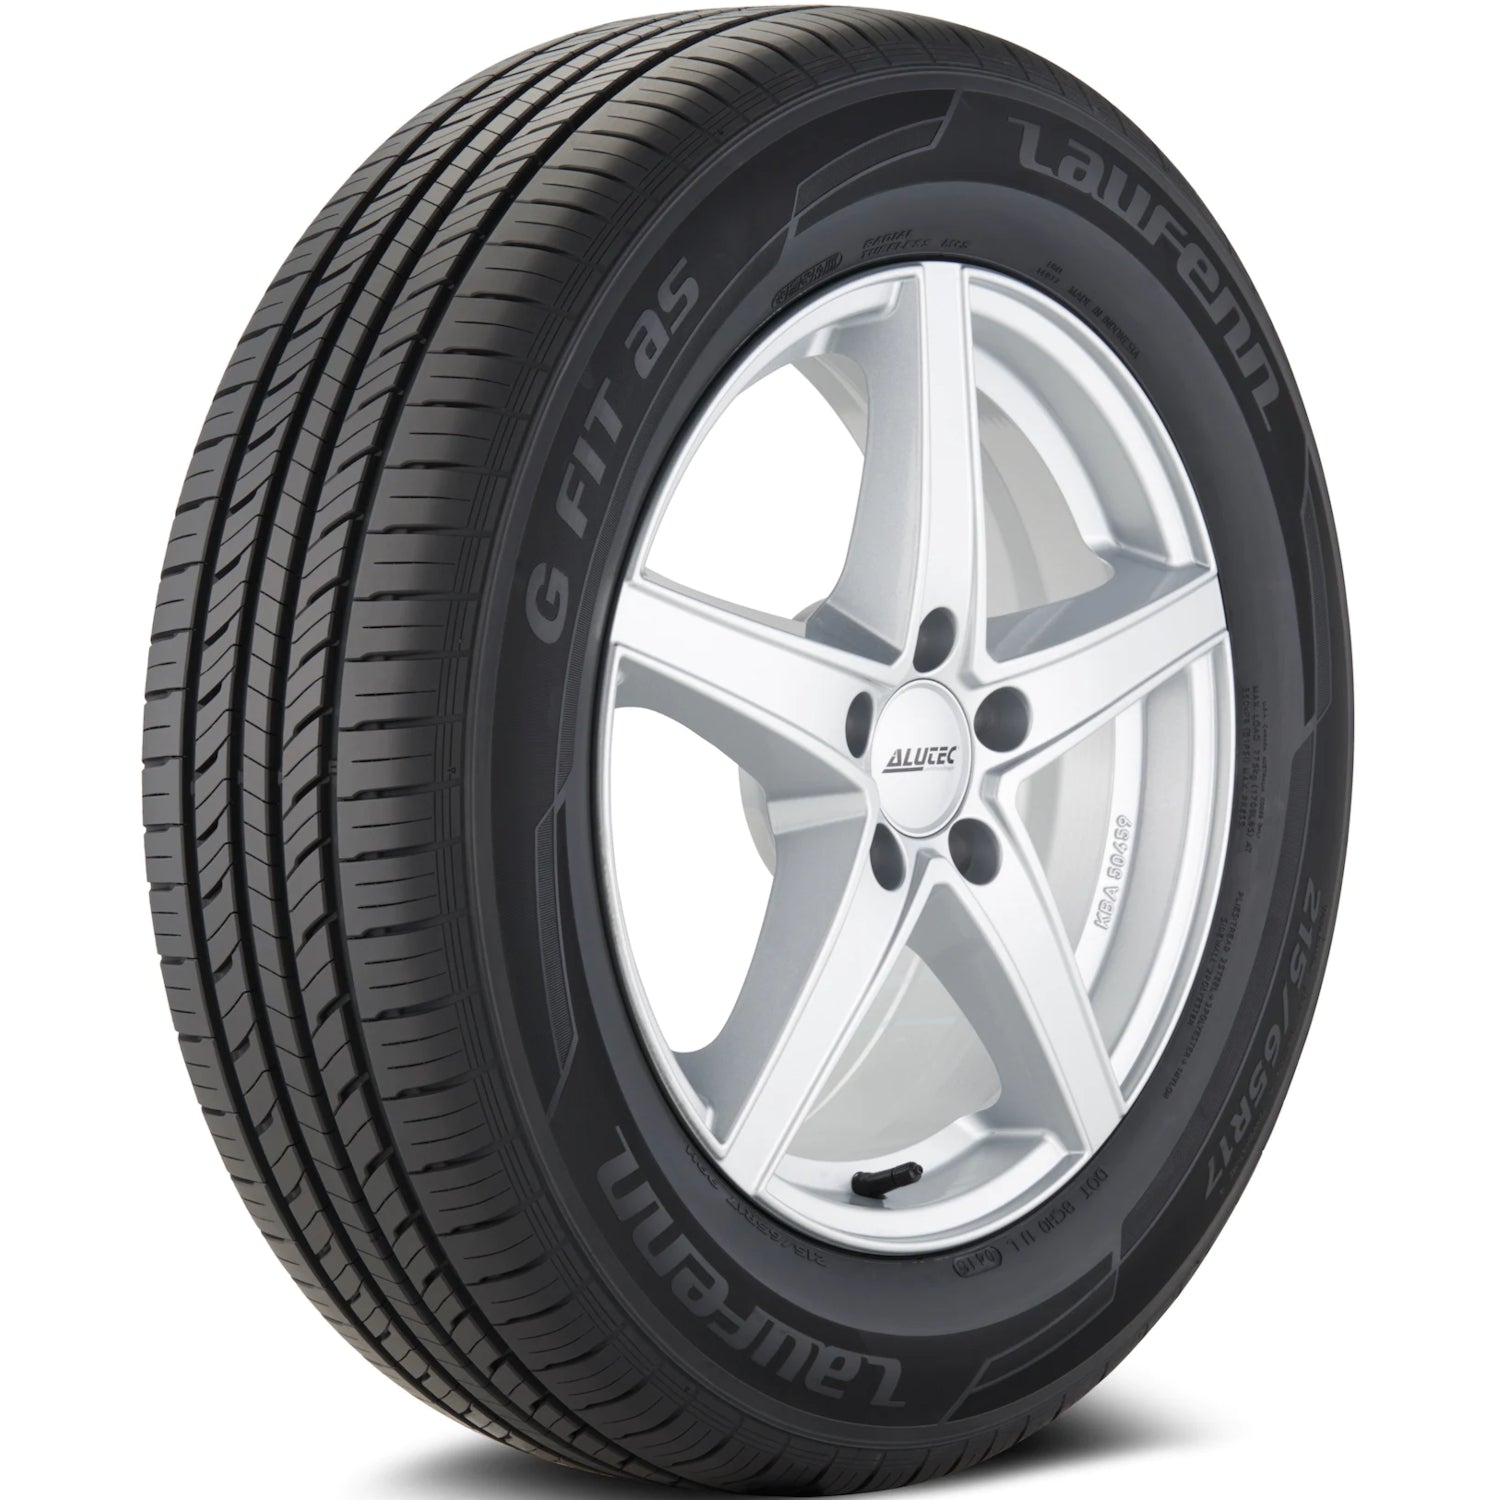 LAUFENN G FIT AS 185/65R15 (24.5X7.3R 15) Tires